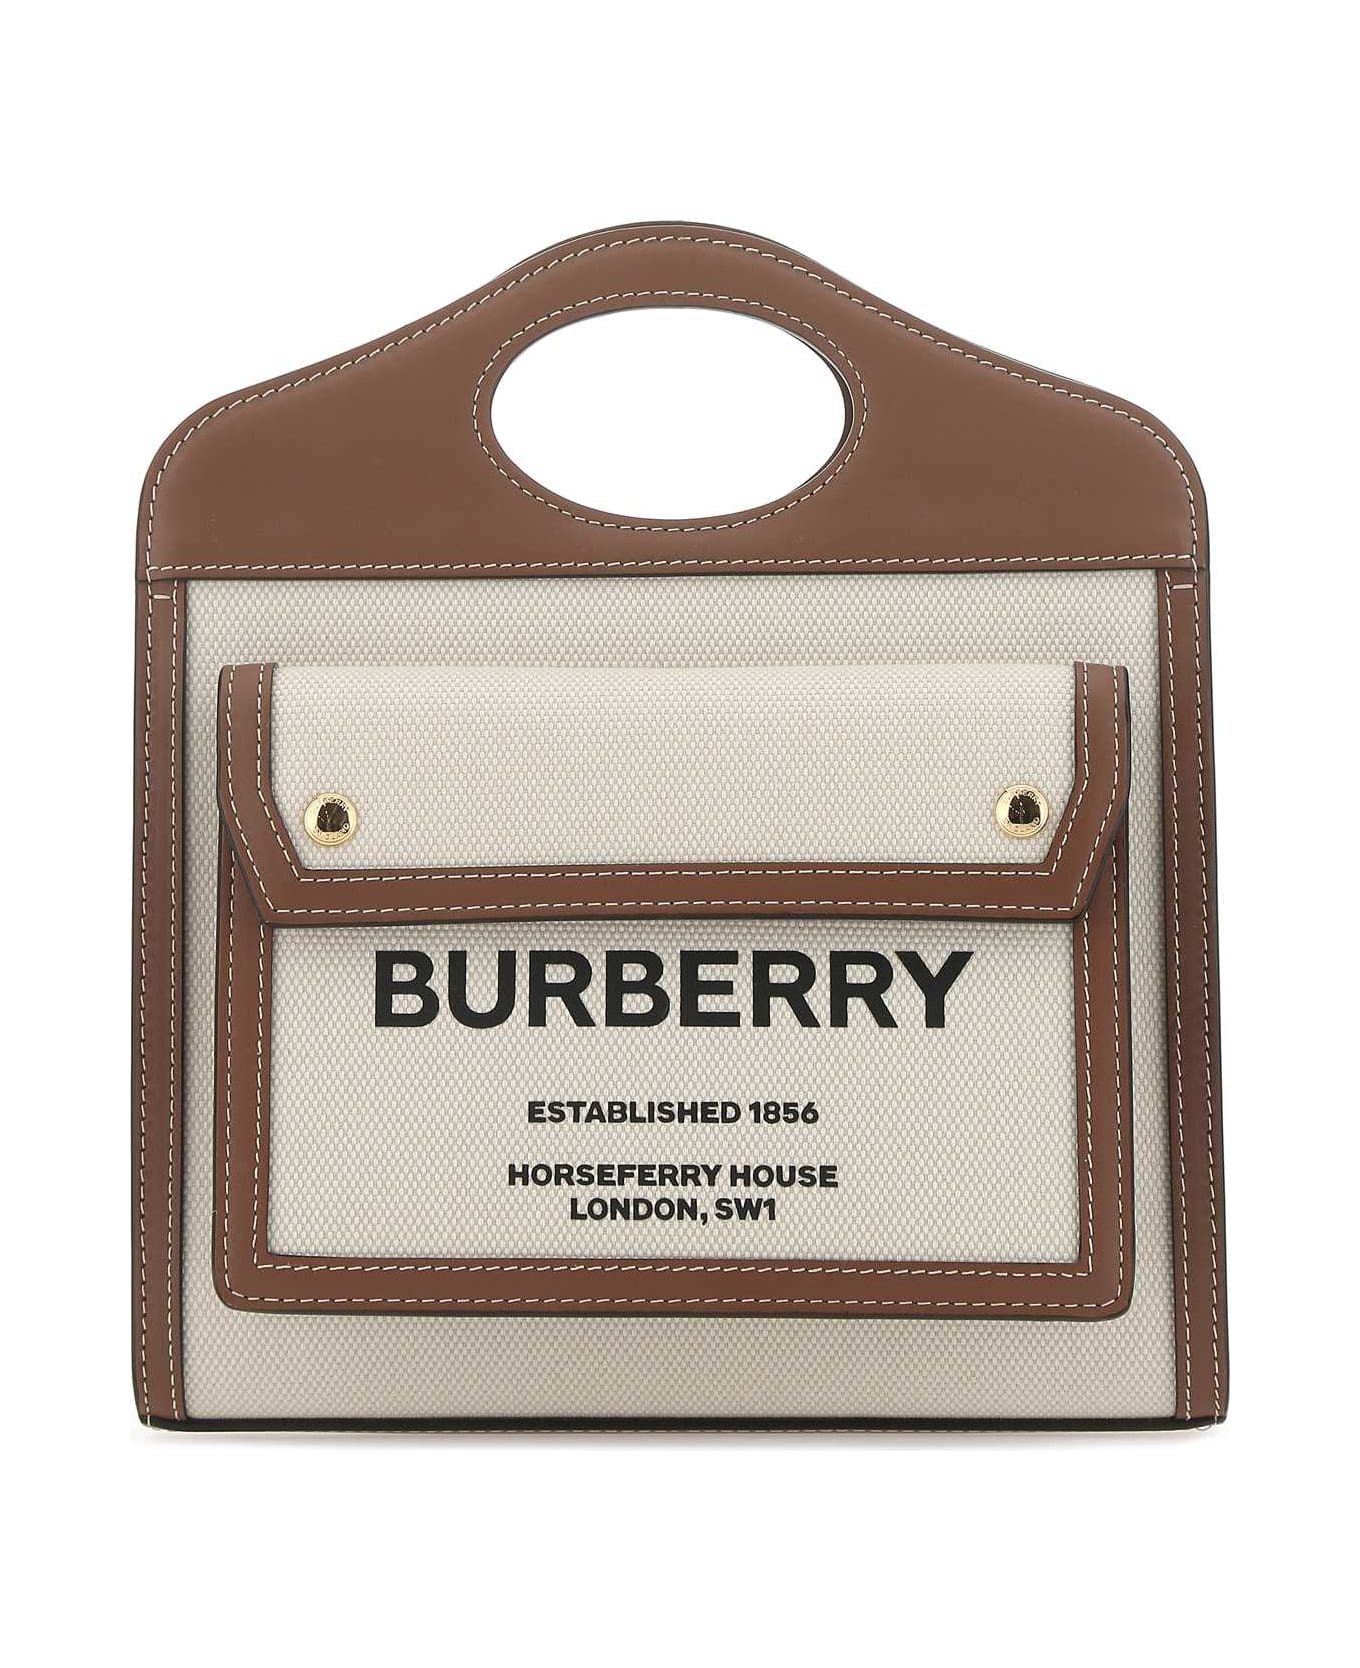 Burberry Two-tone Canvas And Leather Mini Pocket Handbag - NATURALMALTBROWN